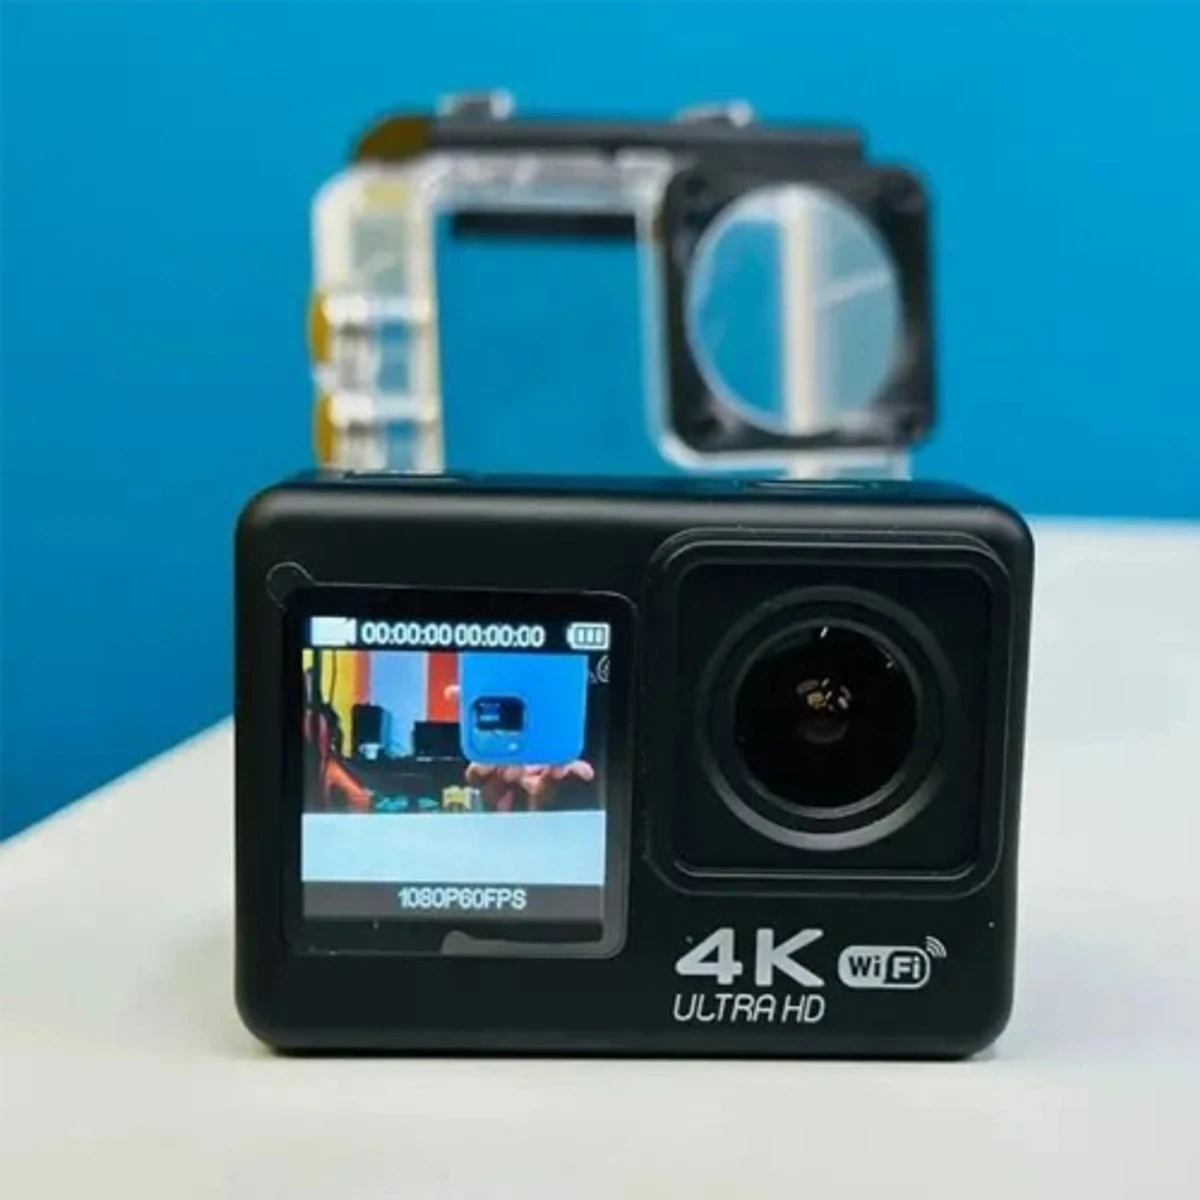 NativeCam 4k Action Camera